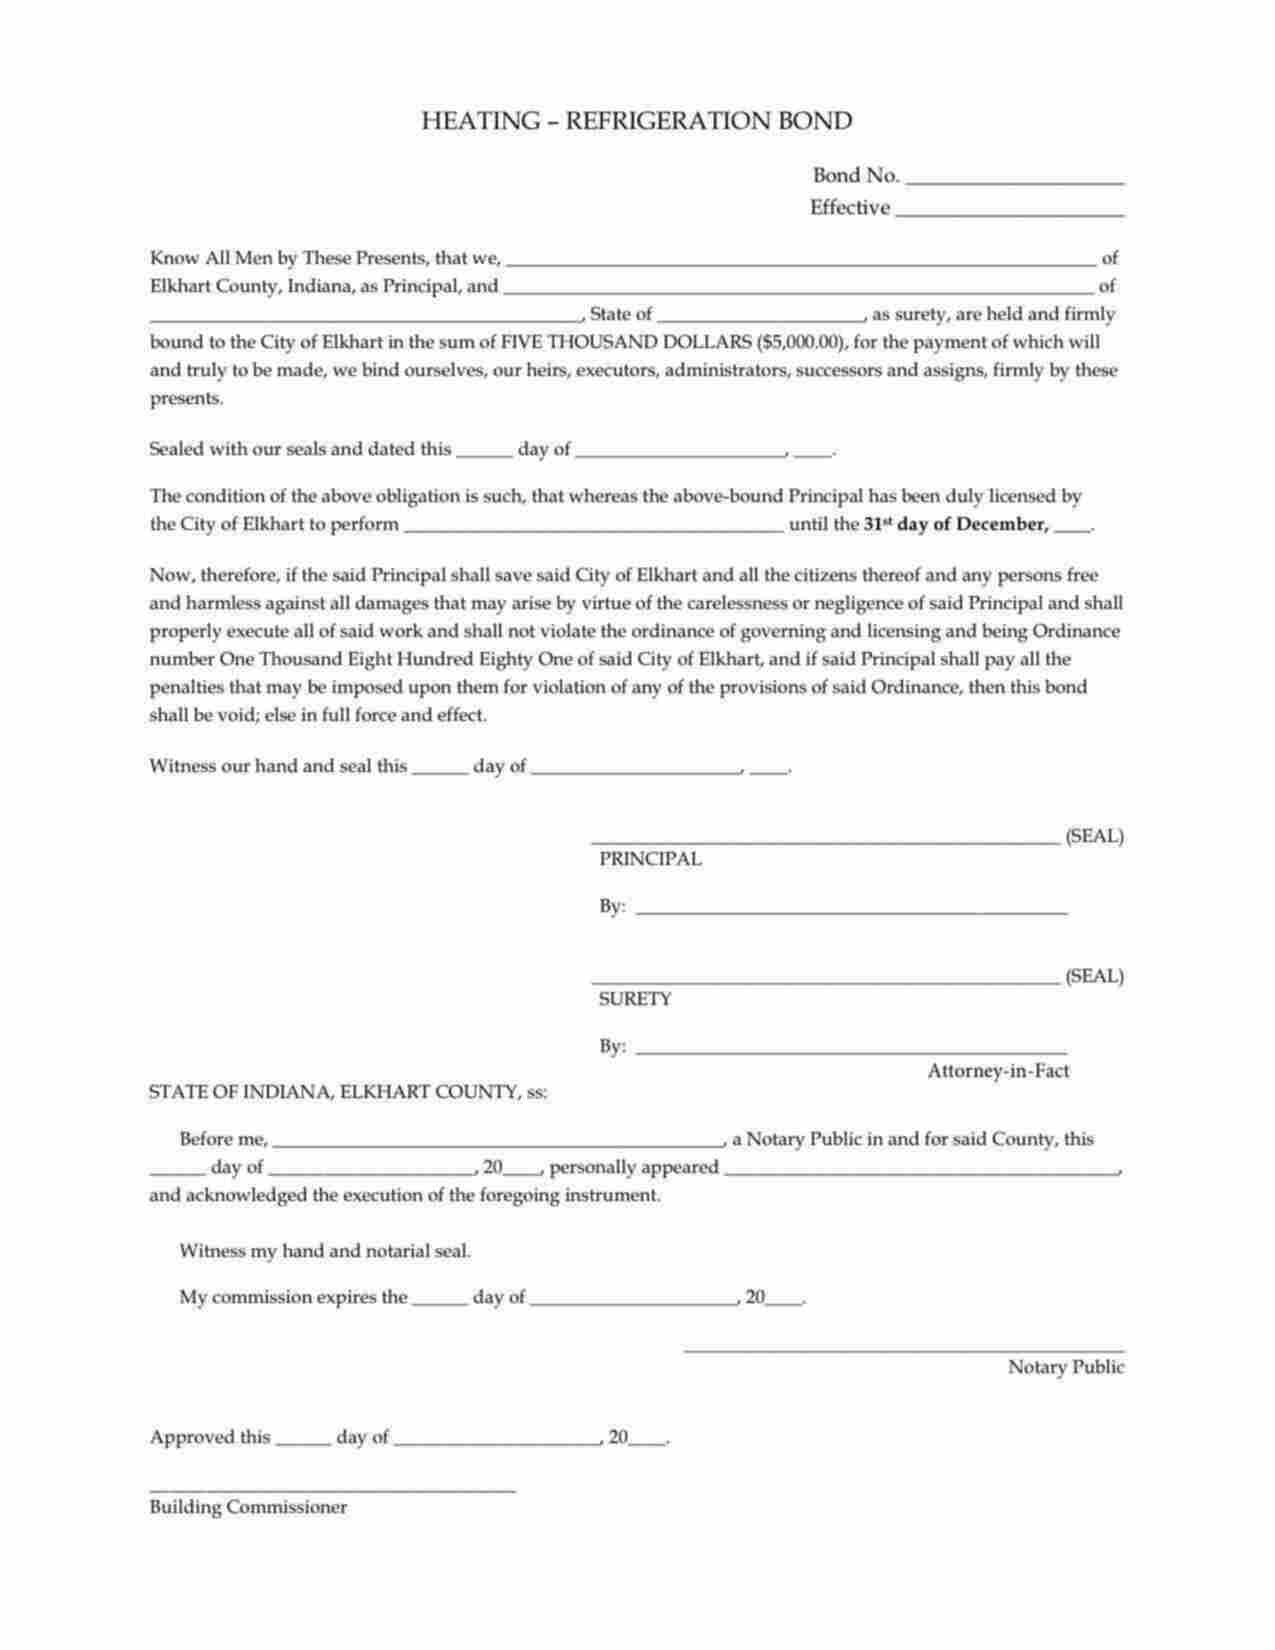 Indiana Heating/Refrigeration Contractors Bond Form